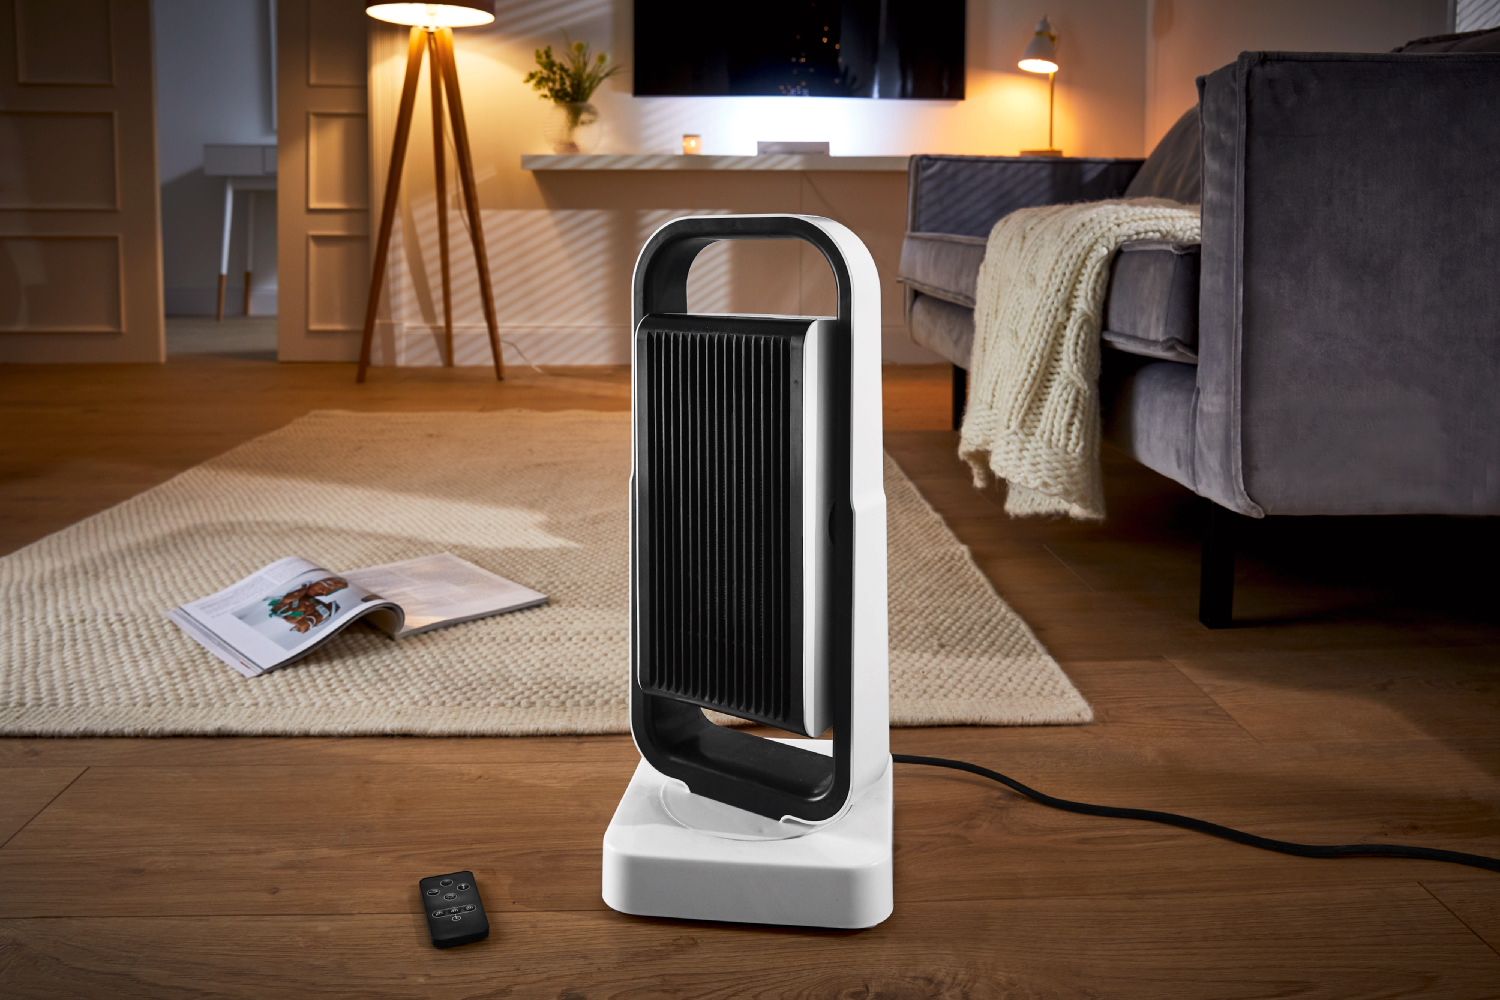 kemikalier område prangende Lidl's affordable smart fan heater is a cooling fan in the summer